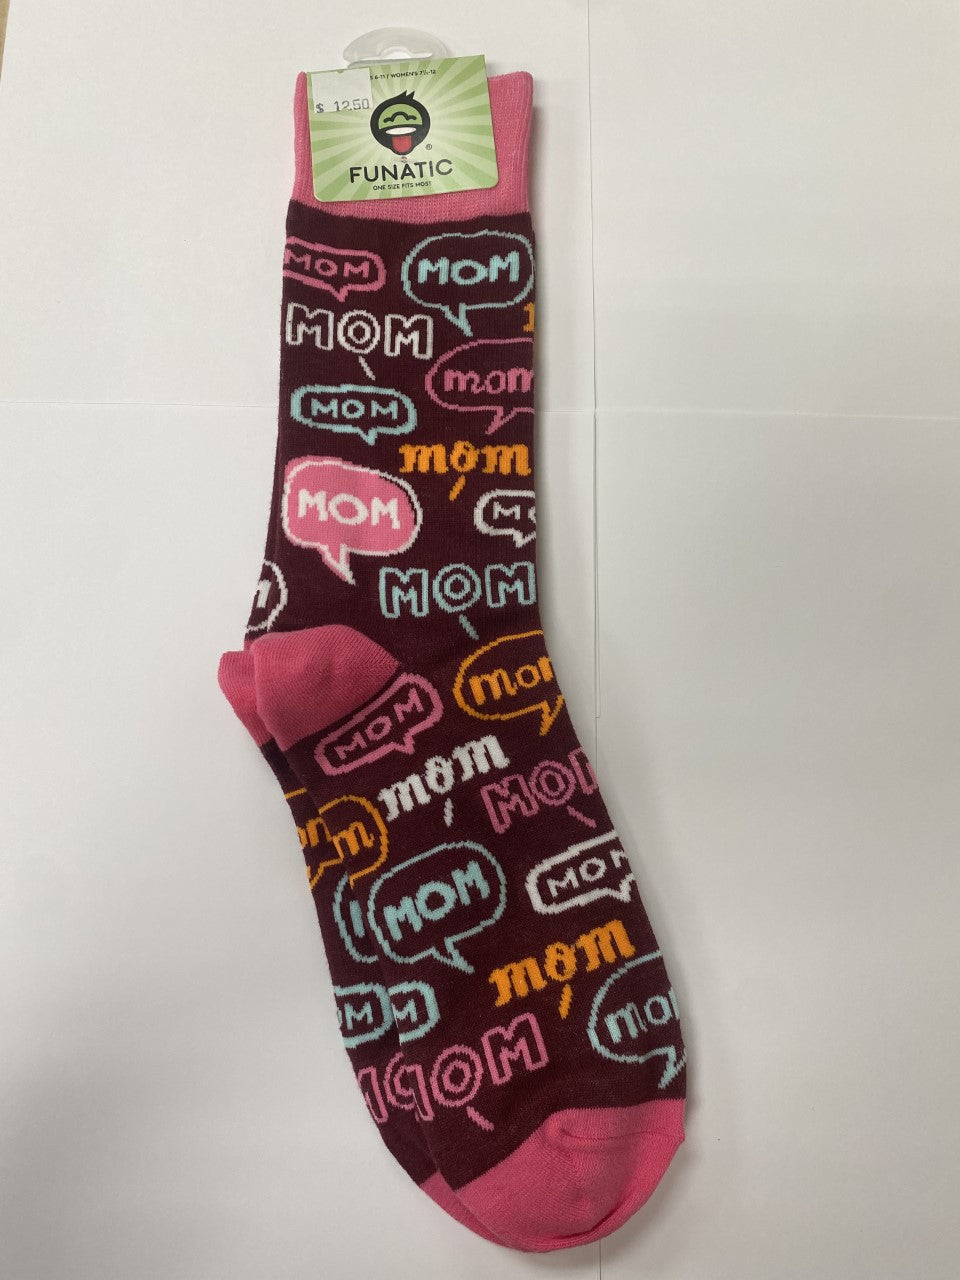 Funatic - Mom! Mom! Mom! Socks